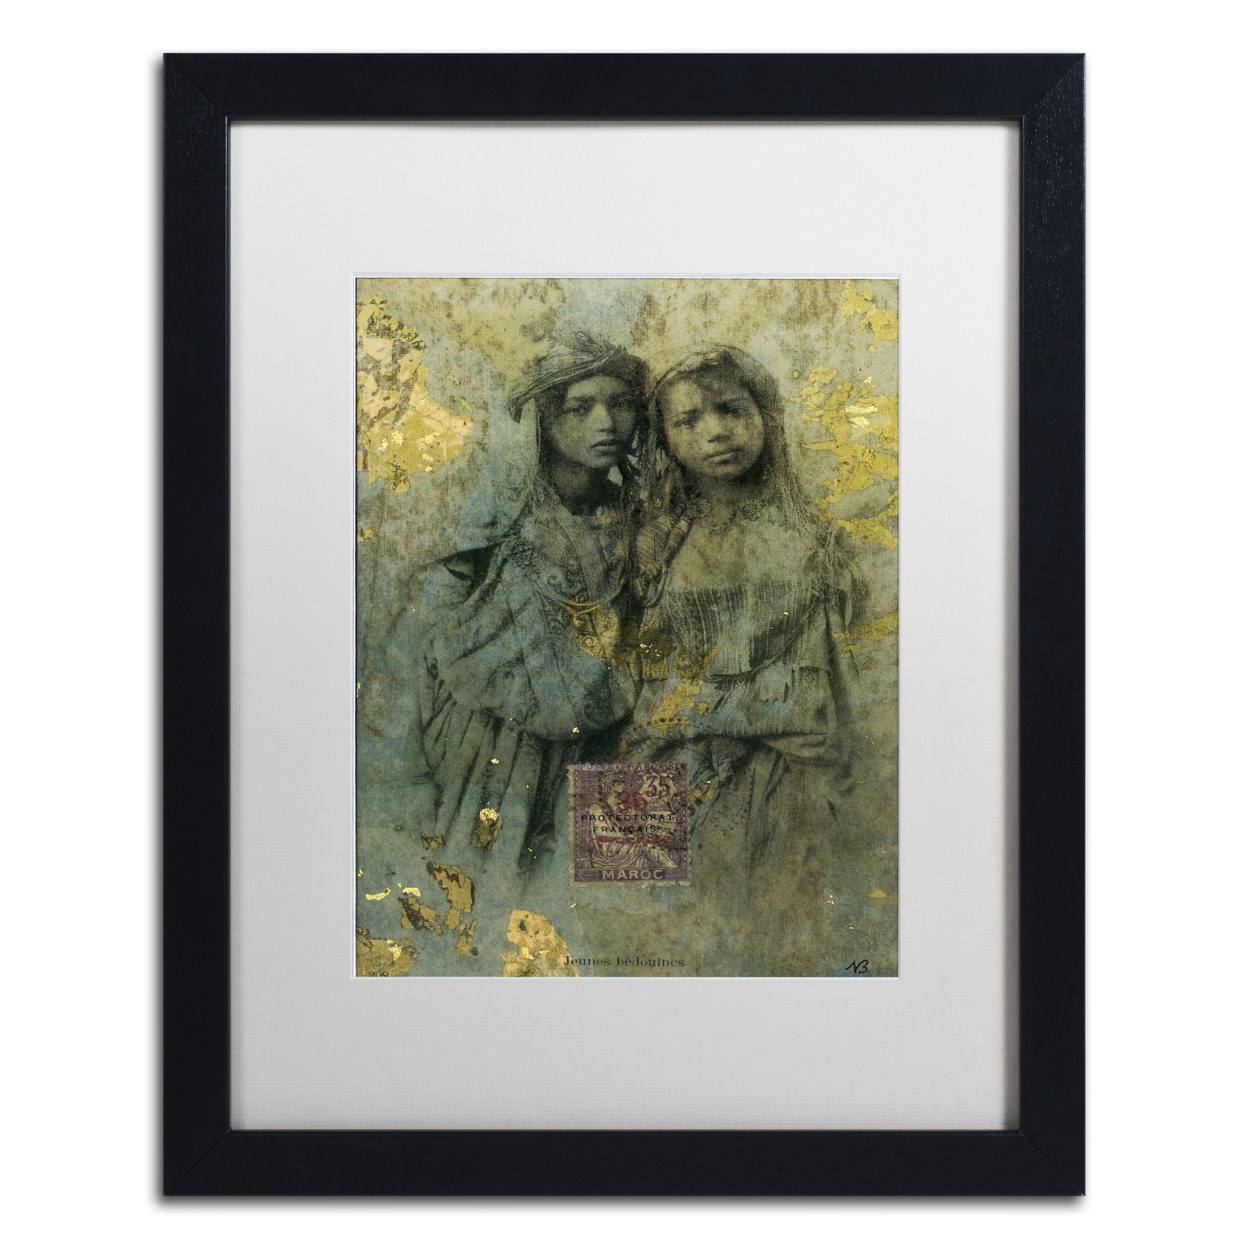 Nick Bantock 'Mauresque Sisters' Black Wooden Framed Art 18 X 22 Inches